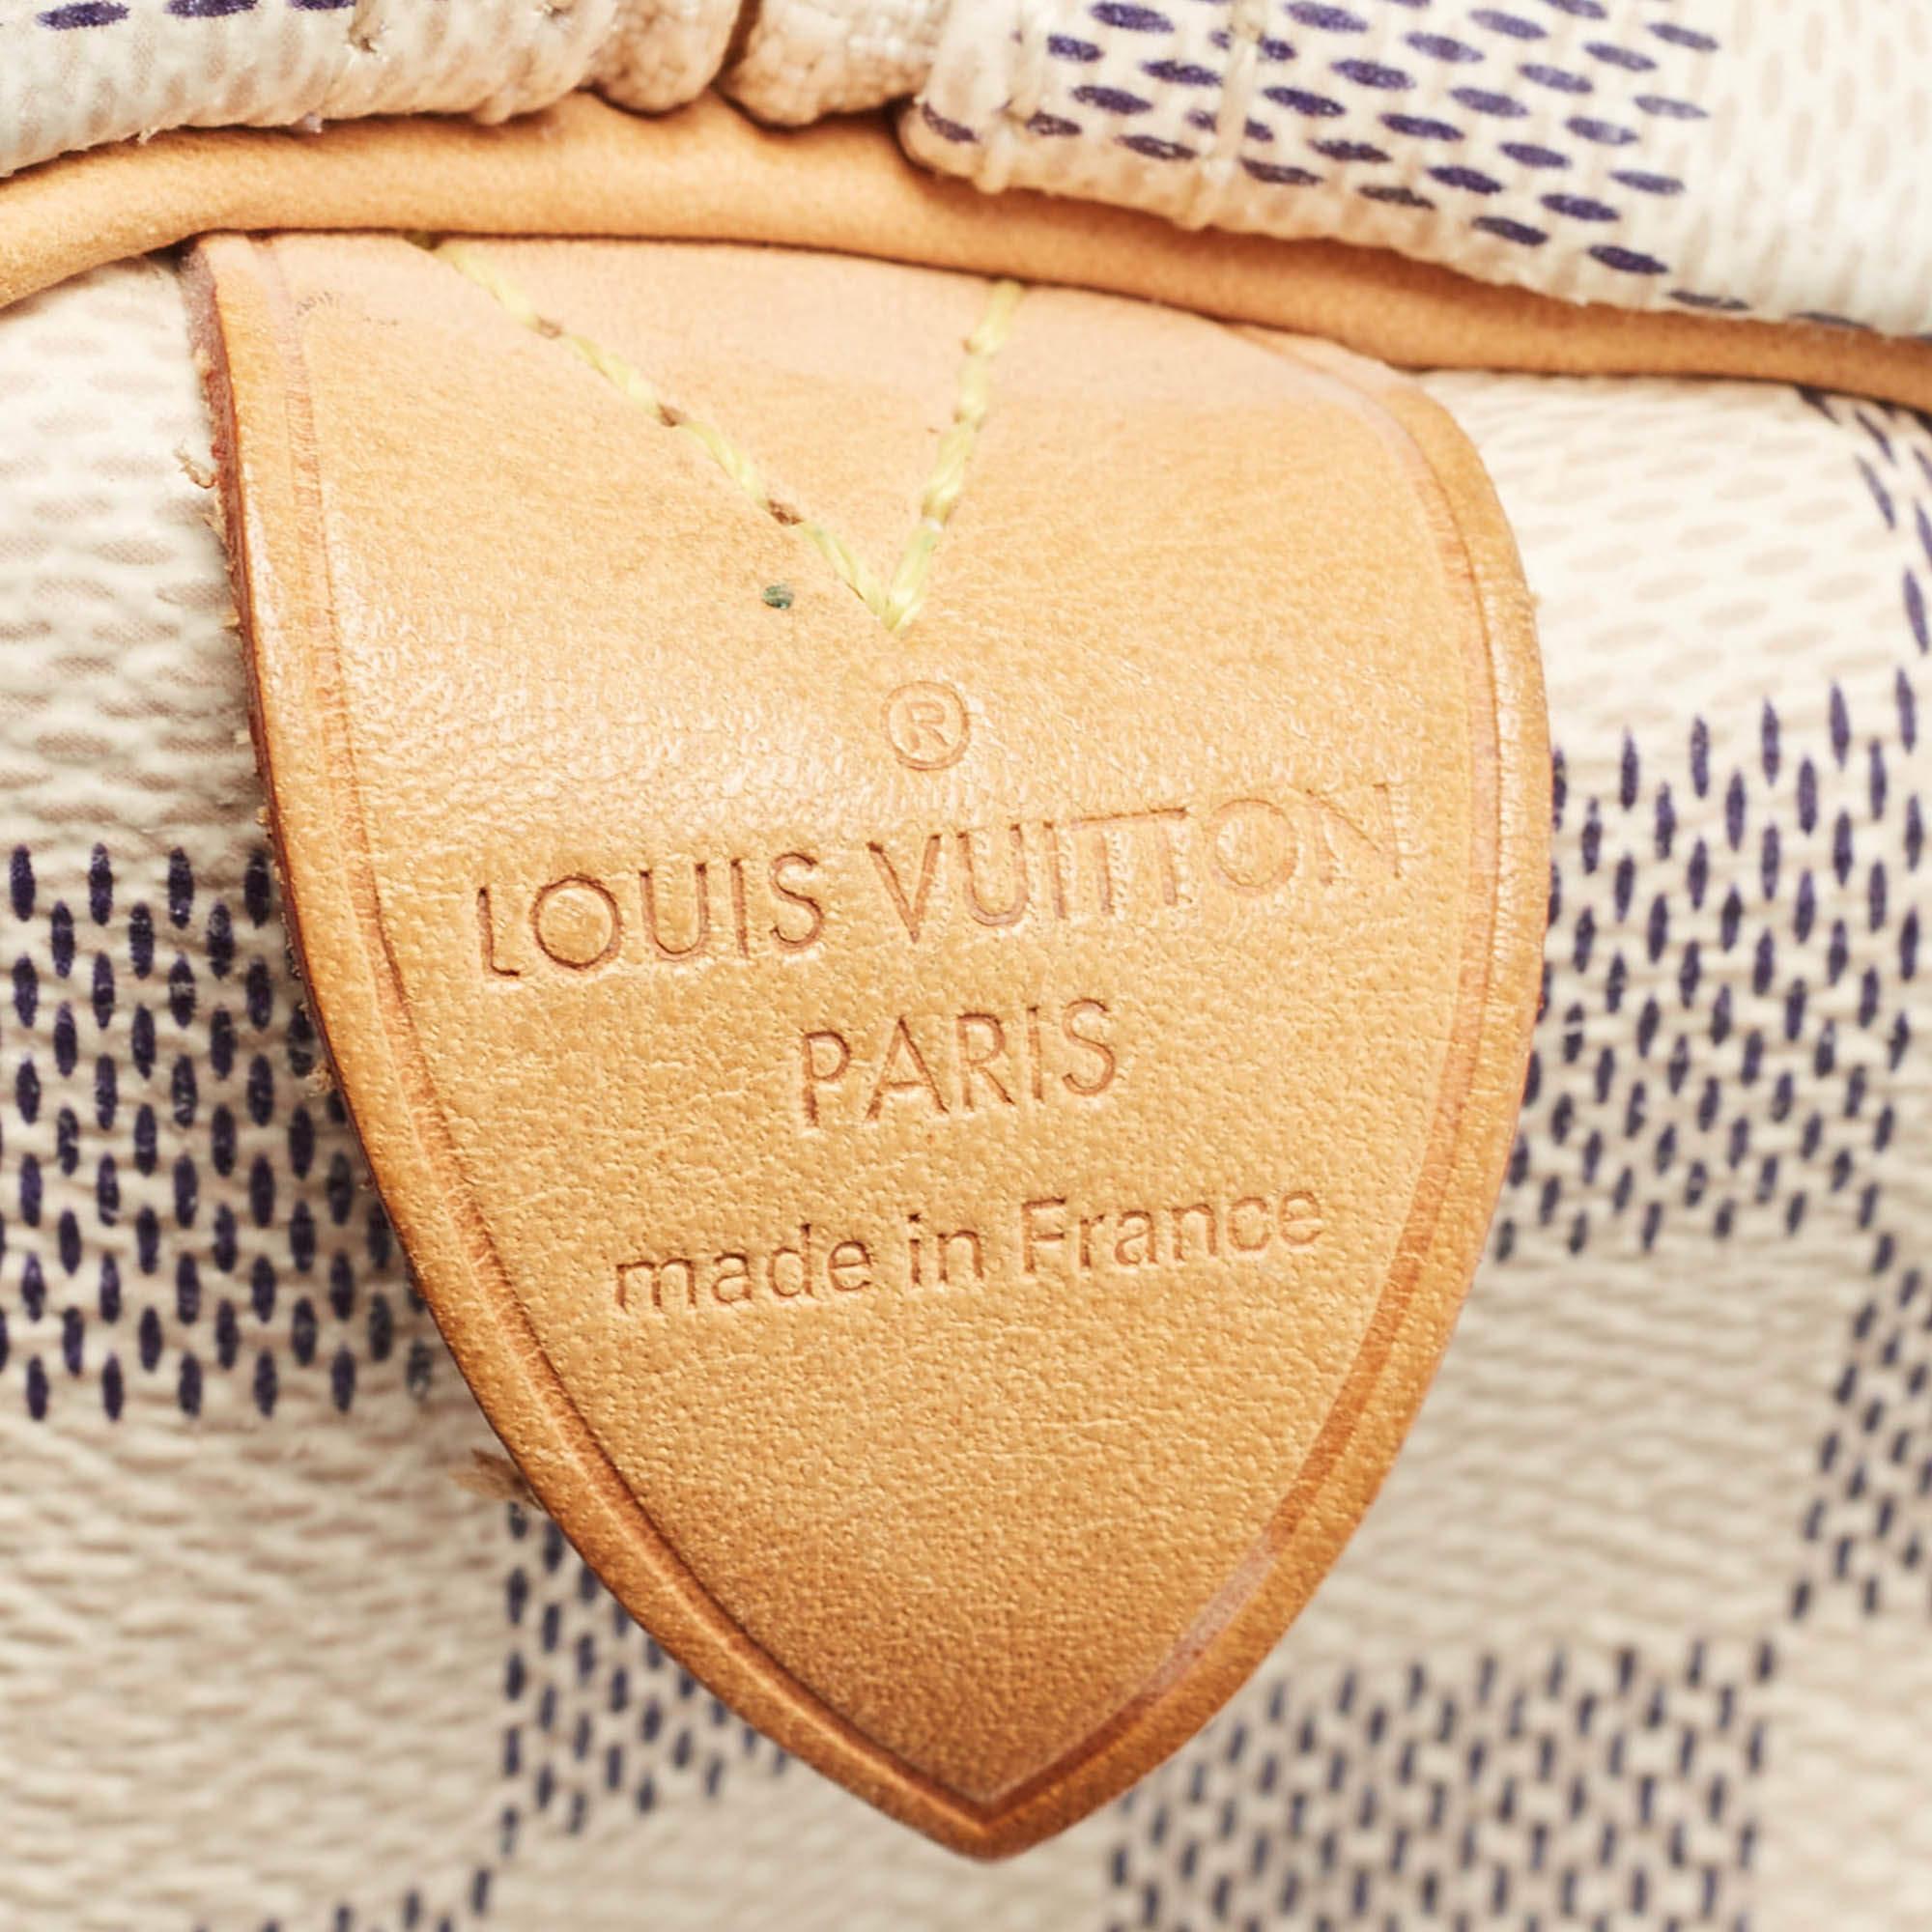 Louis Vuitton Damier Azur Canvas Speedy 25 Bag 2